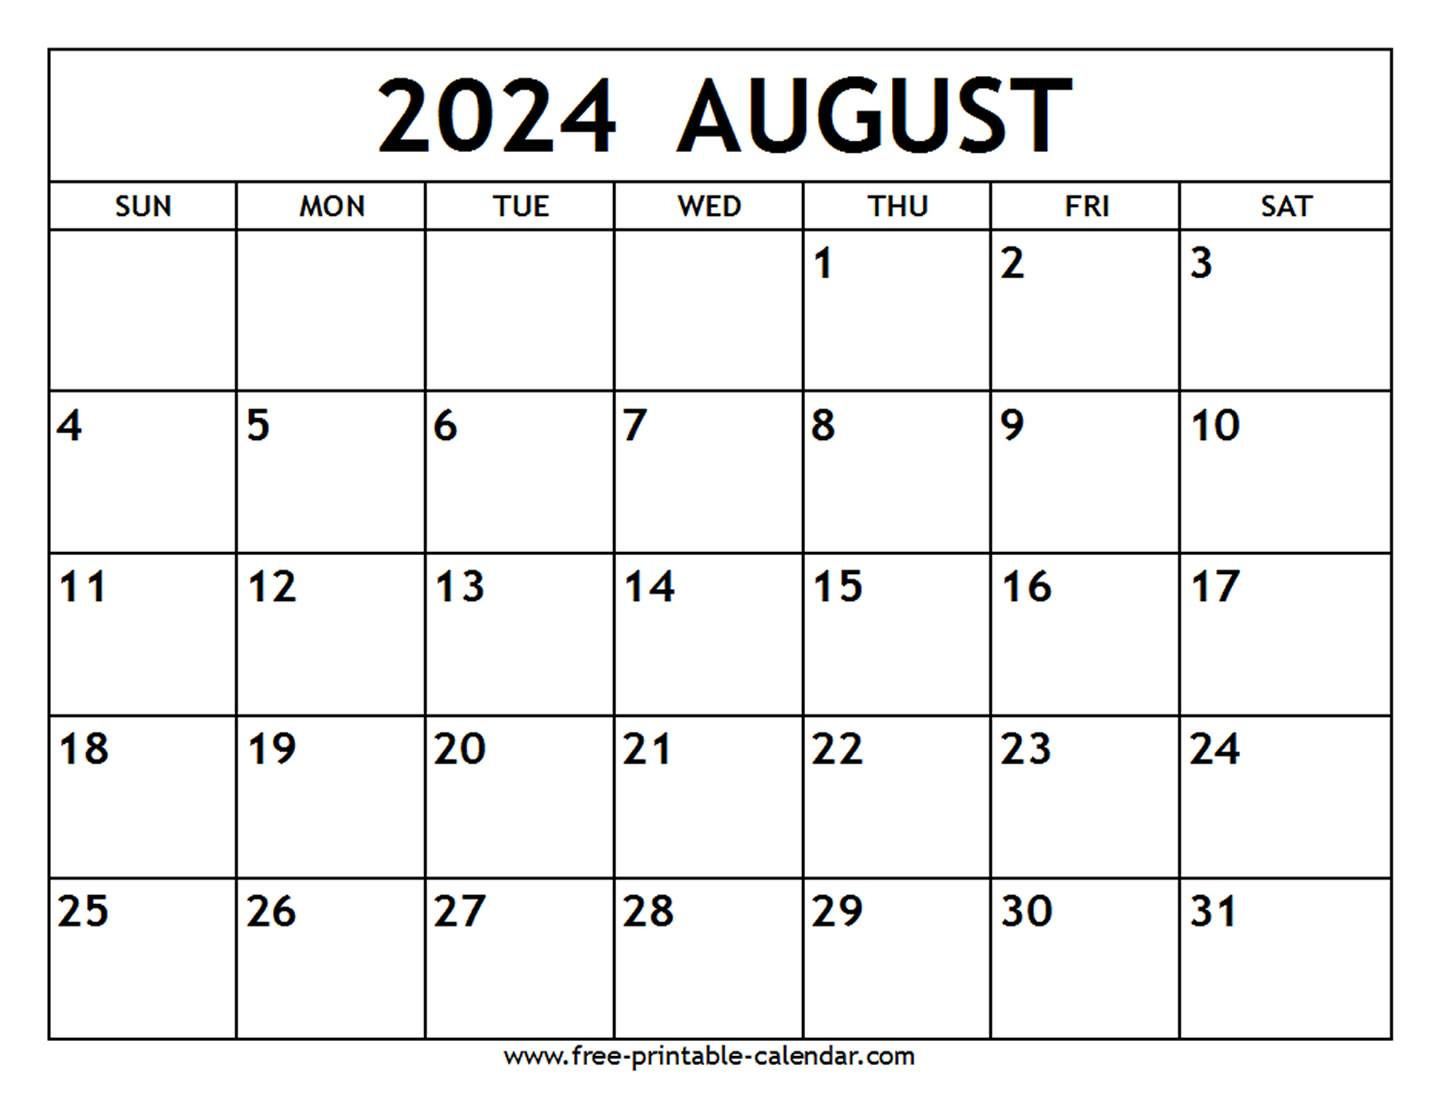 August 2024 Calendar - Free-Printable-Calendar intended for Free Printable Calendar August 2024 Pdf